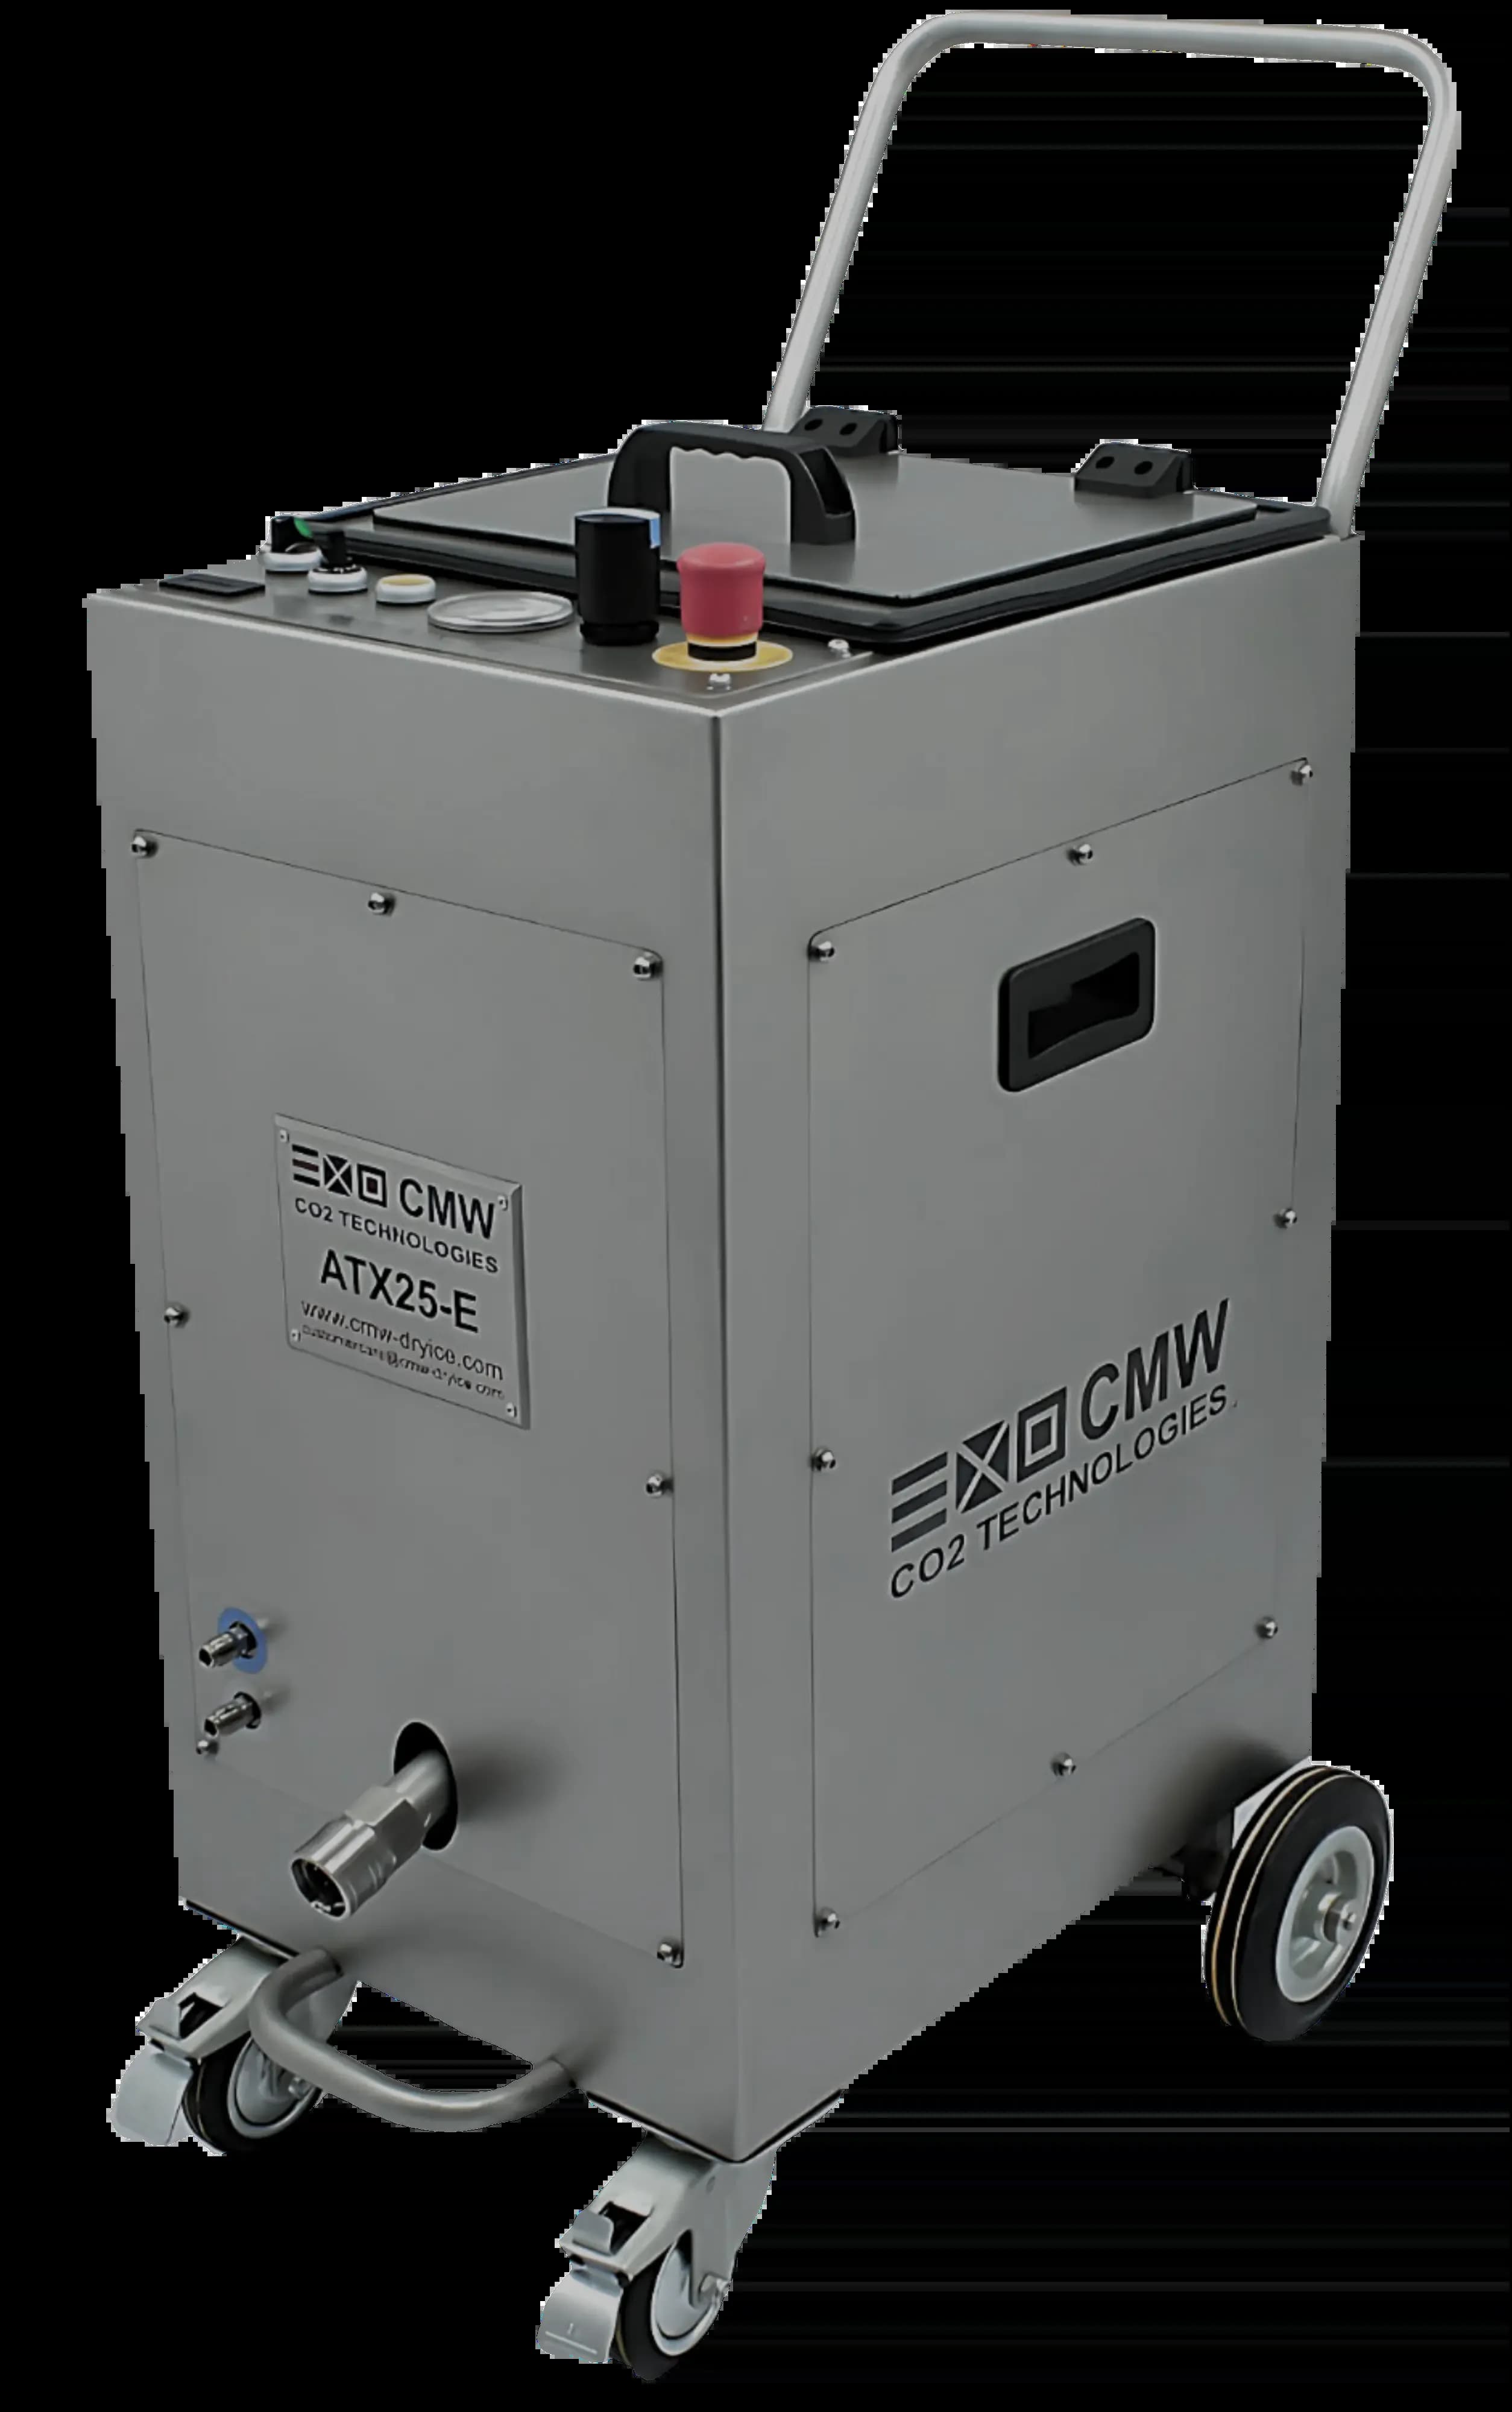 ATX 25 E V1 CMW CO2 Technologies Dry Ice Blasting